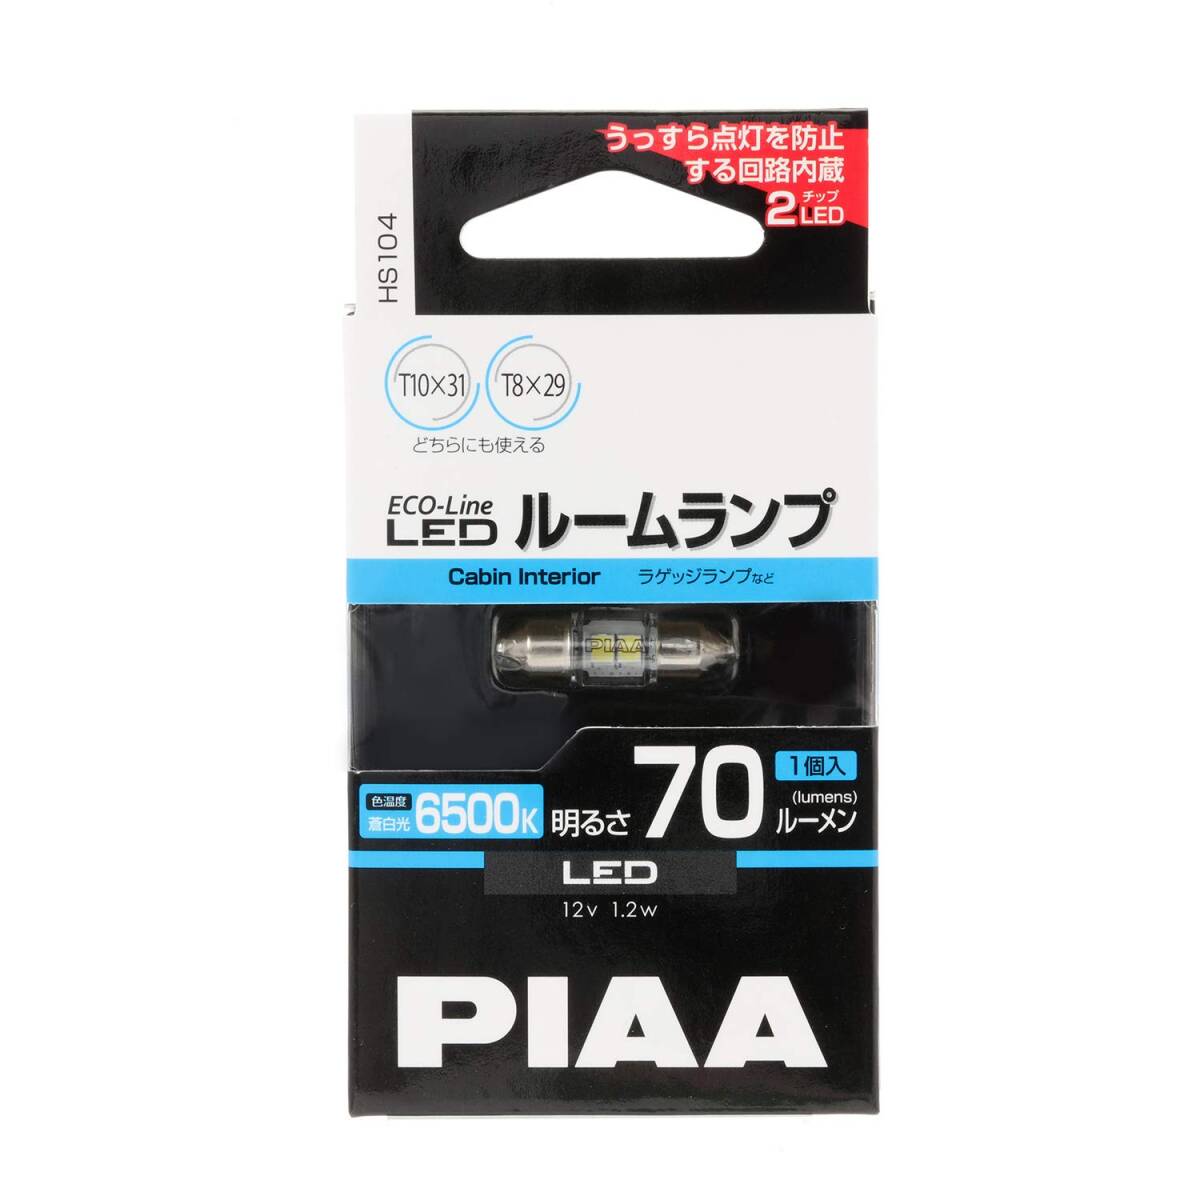 PIAA ルーム/ラゲッジランプ用 LEDバルブ T10x31 / T8x29 6500K 70lm ECO-Lineシリーズ_車検対応 1個入_画像1